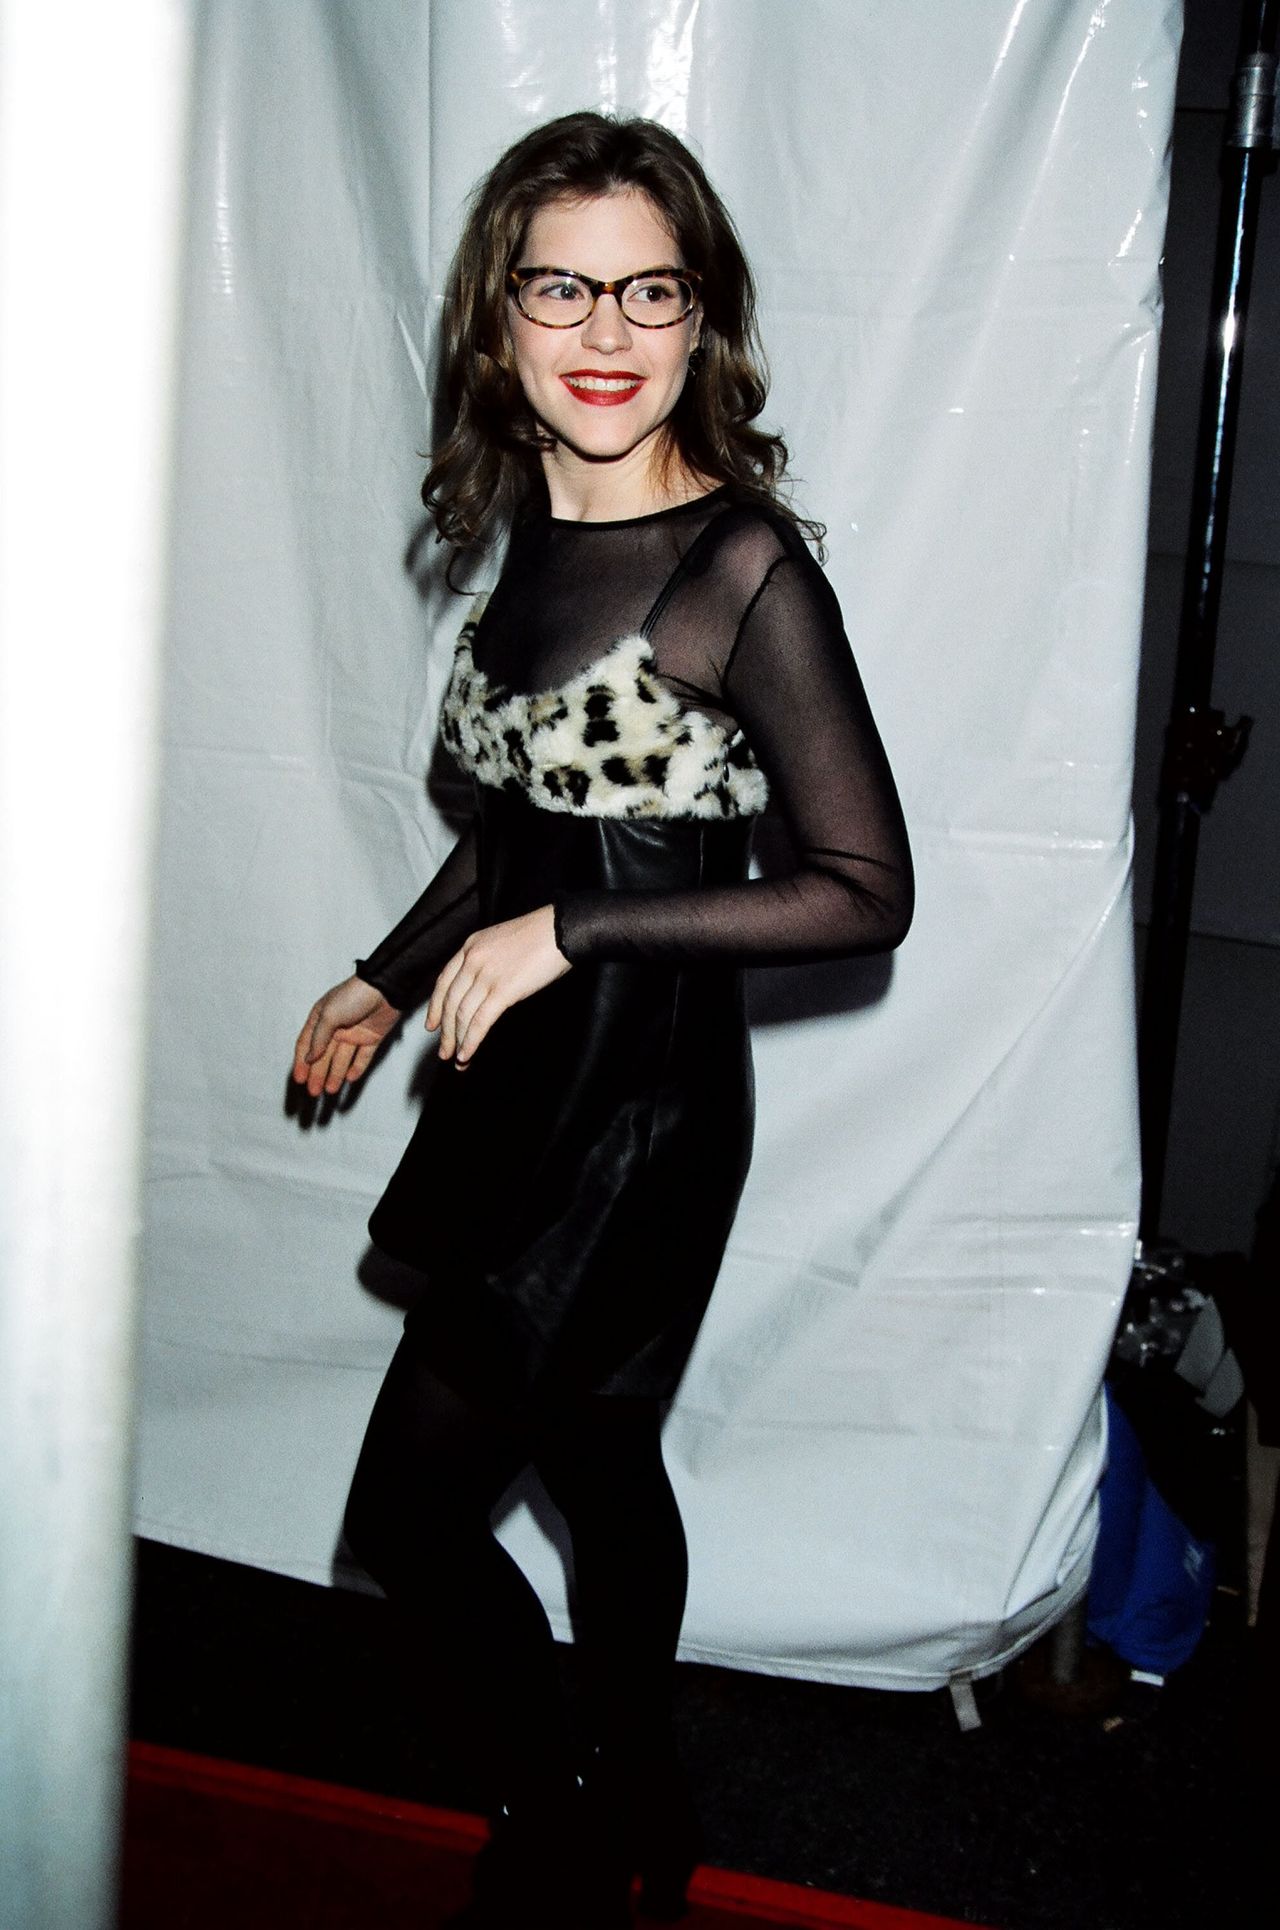 Loeb during the 1994 MTV Video Music Awards at Radio City Music Hall in New York City, New York.